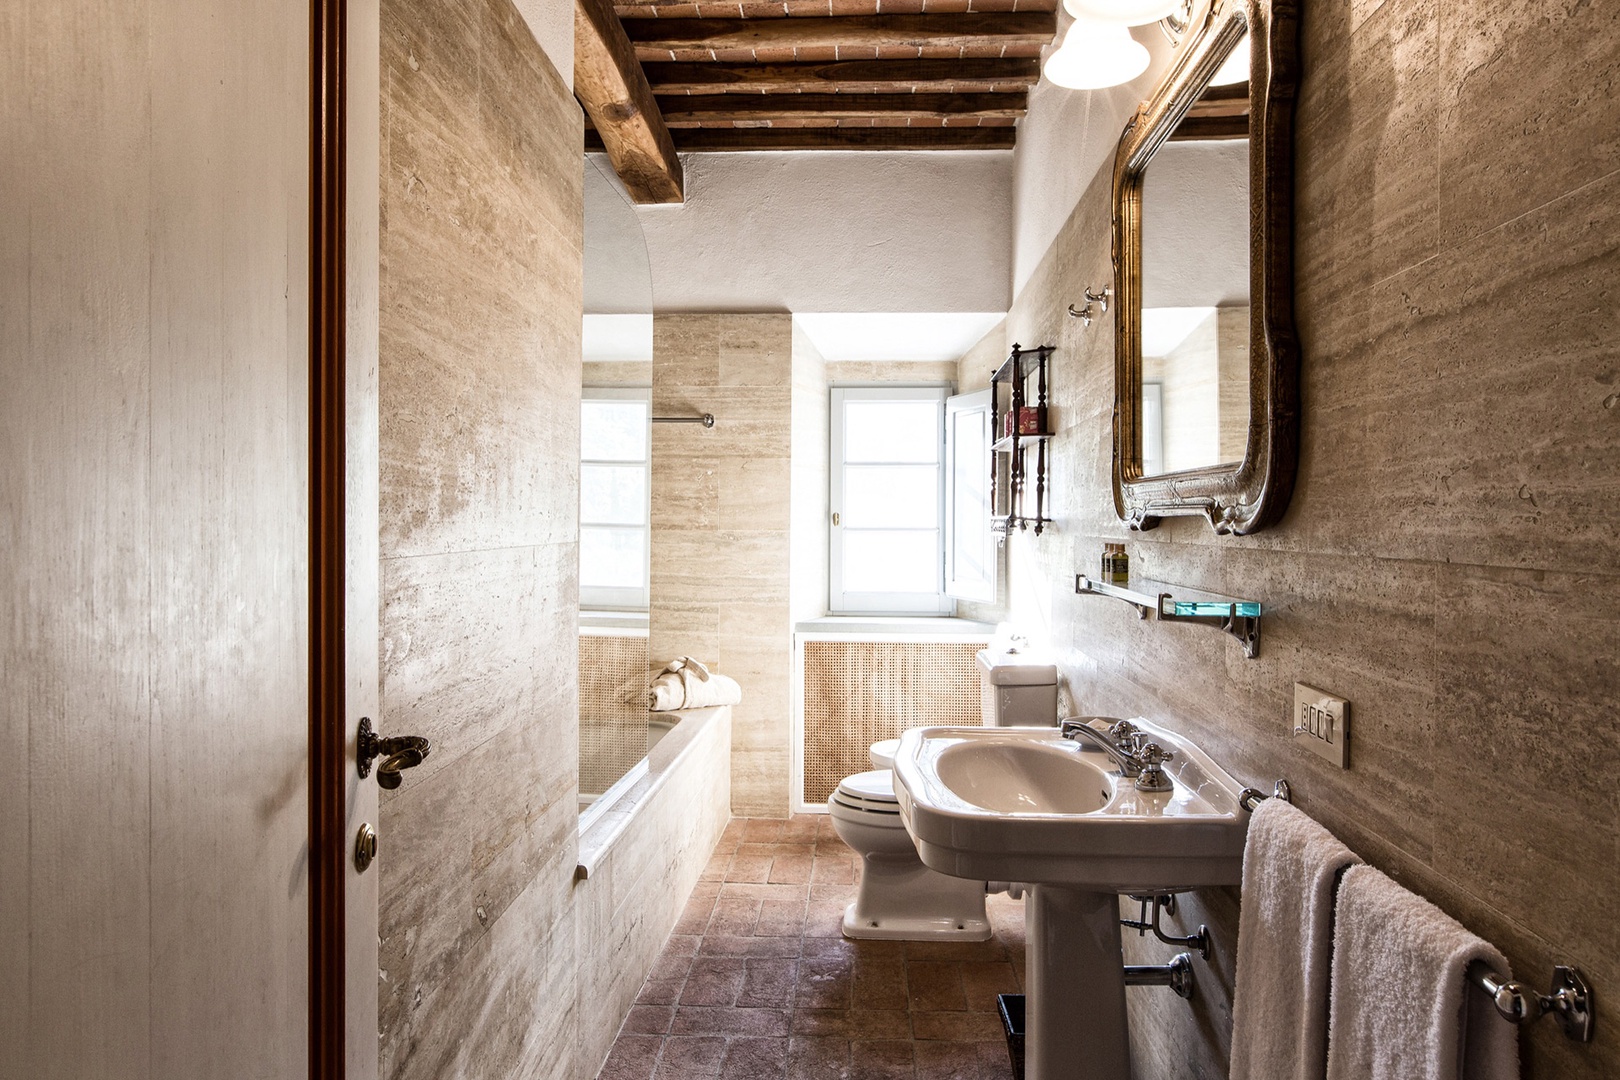 Rustic charm in each of the en suite bathrooms of this villa.